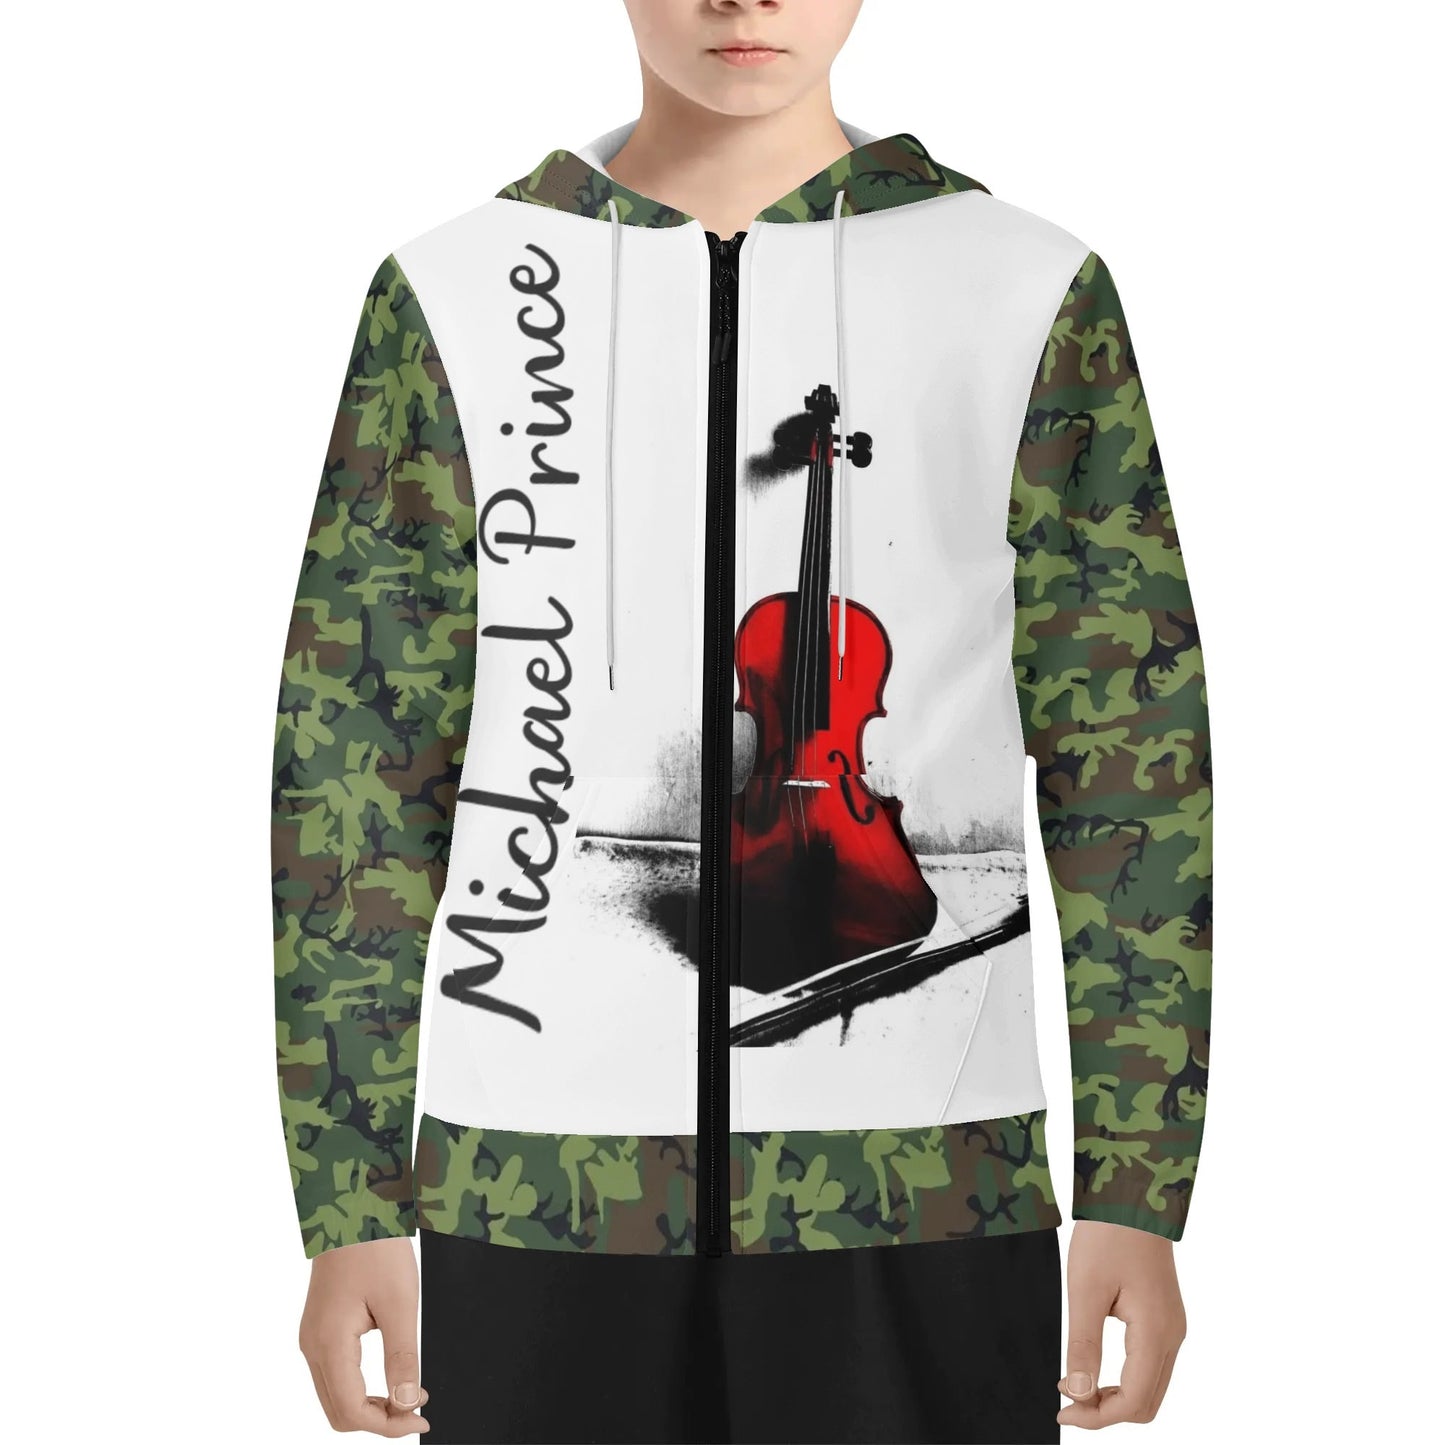 MPV Youth Lightweight Zipper Jumper Sweatshirt Hoodie